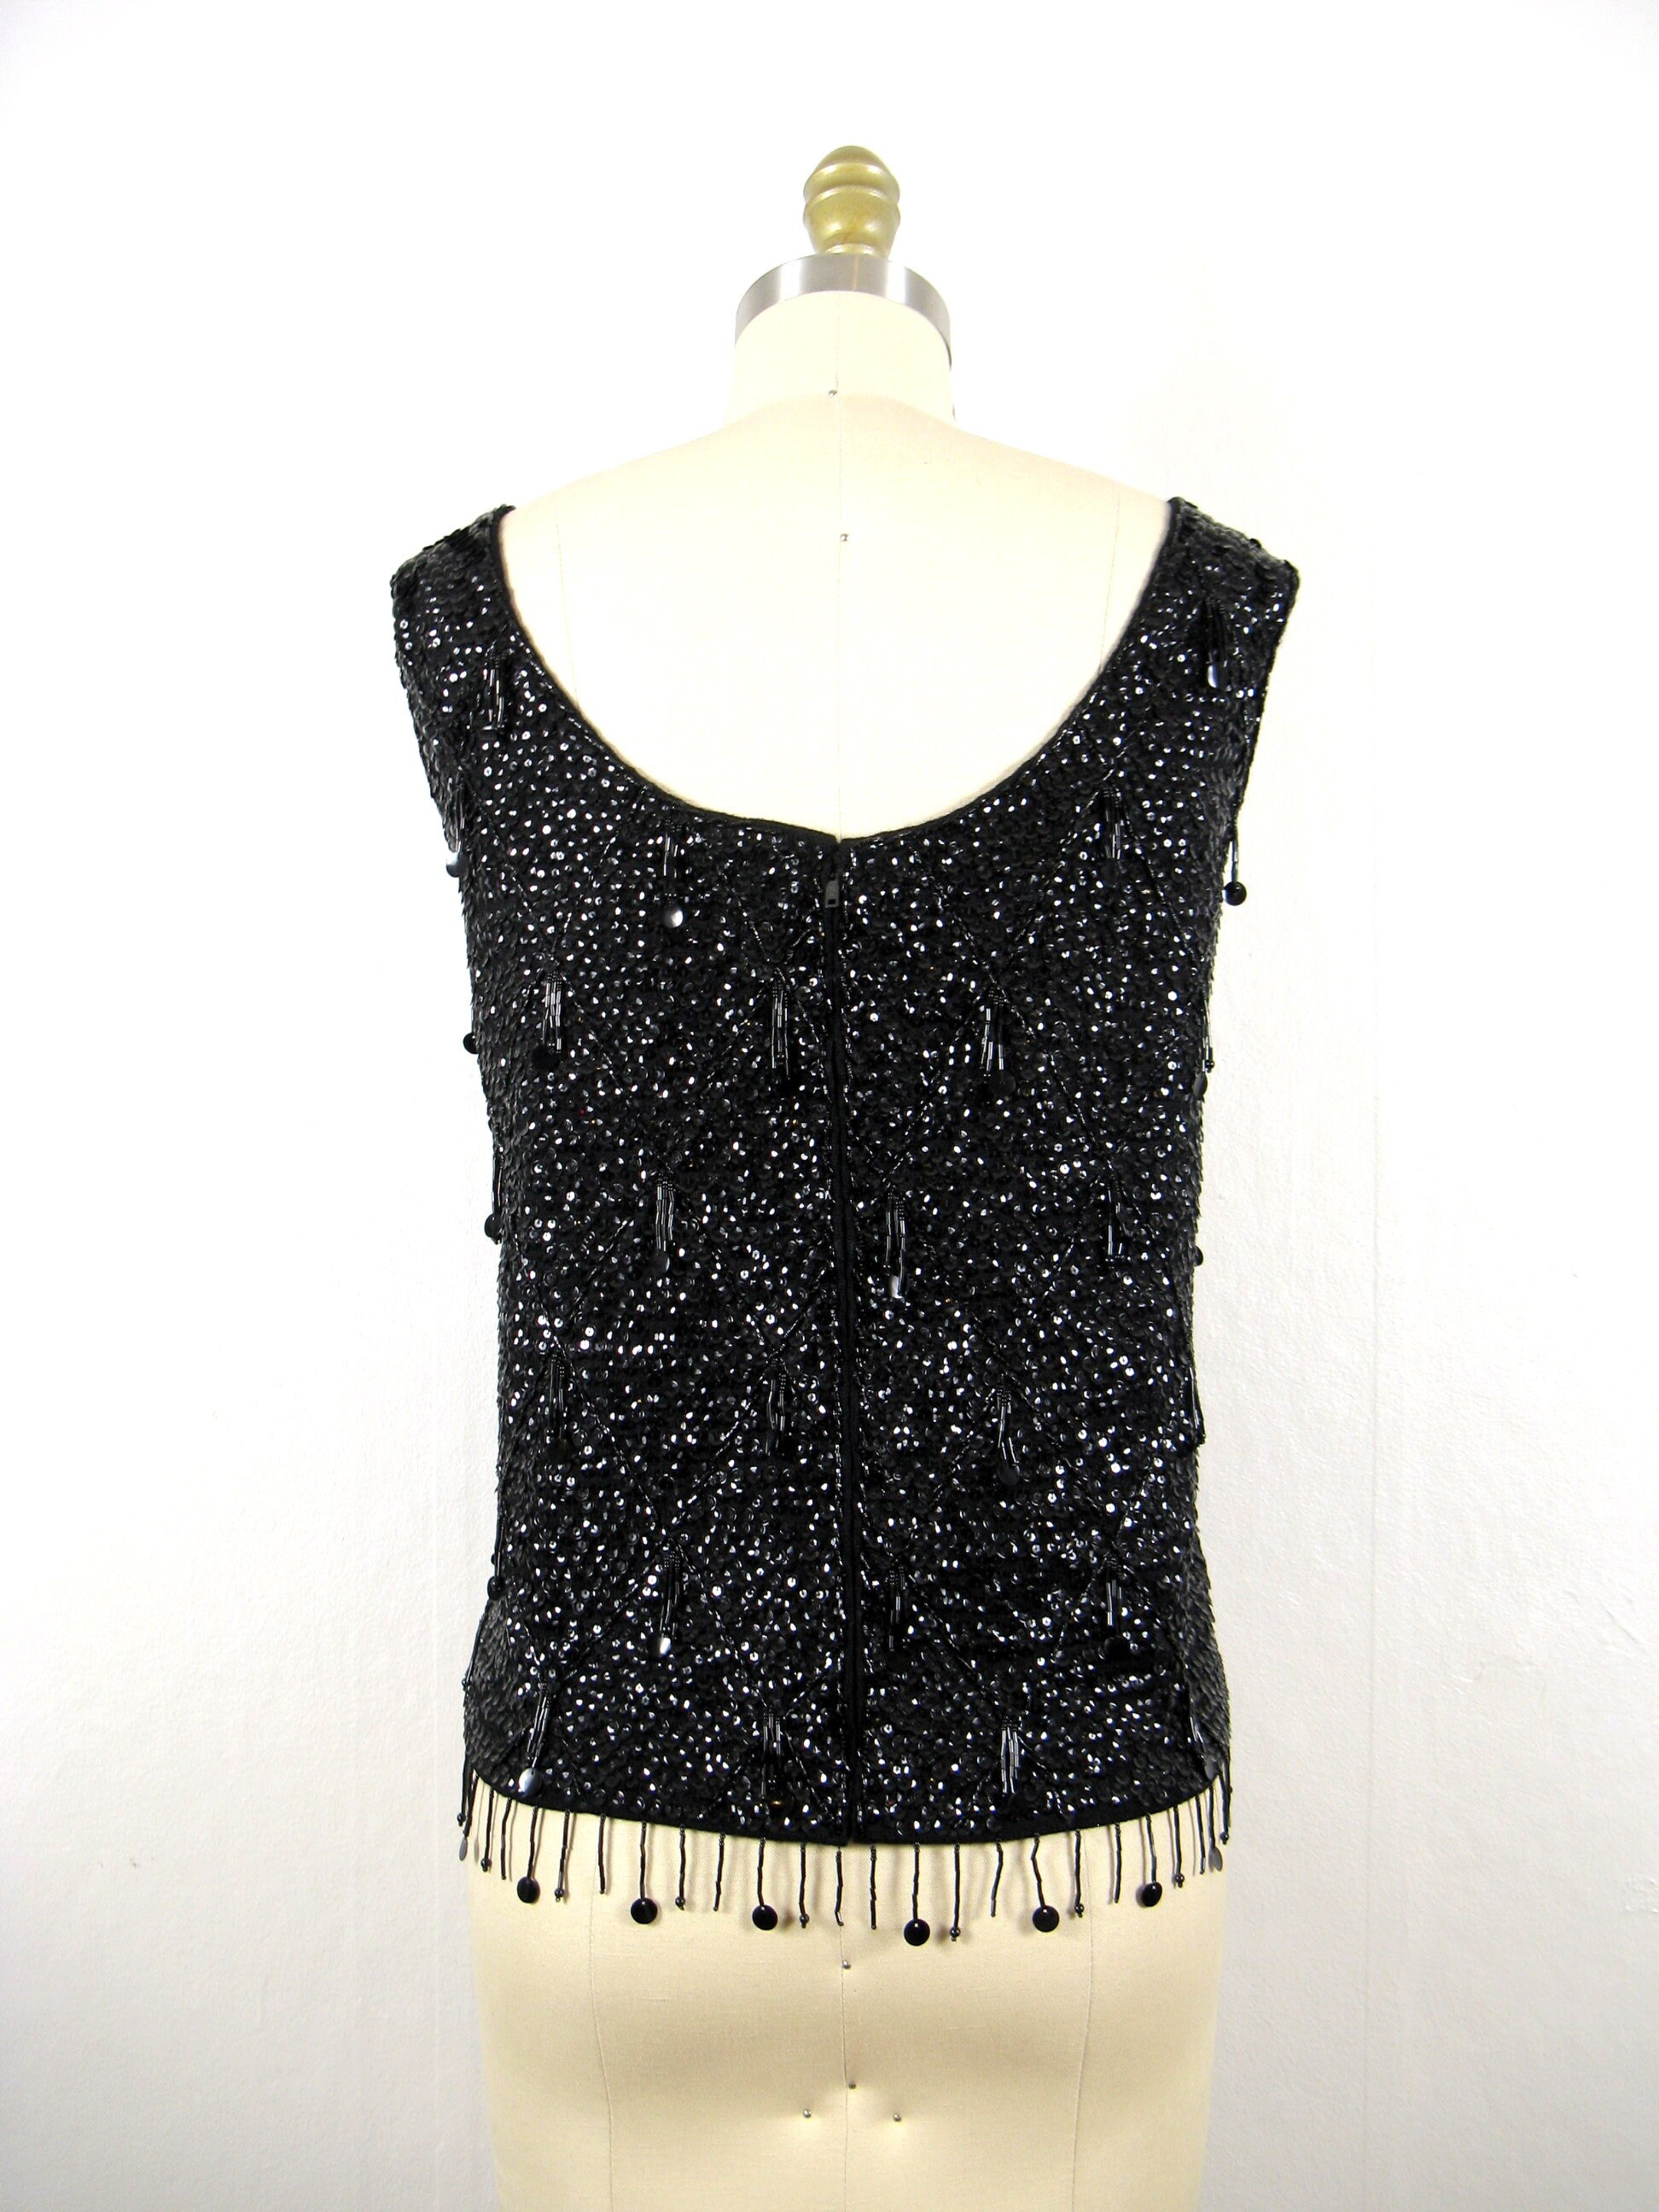 Vintage 1960s Black Sequin Knit Shell Top Blouse Size M/L | Etsy